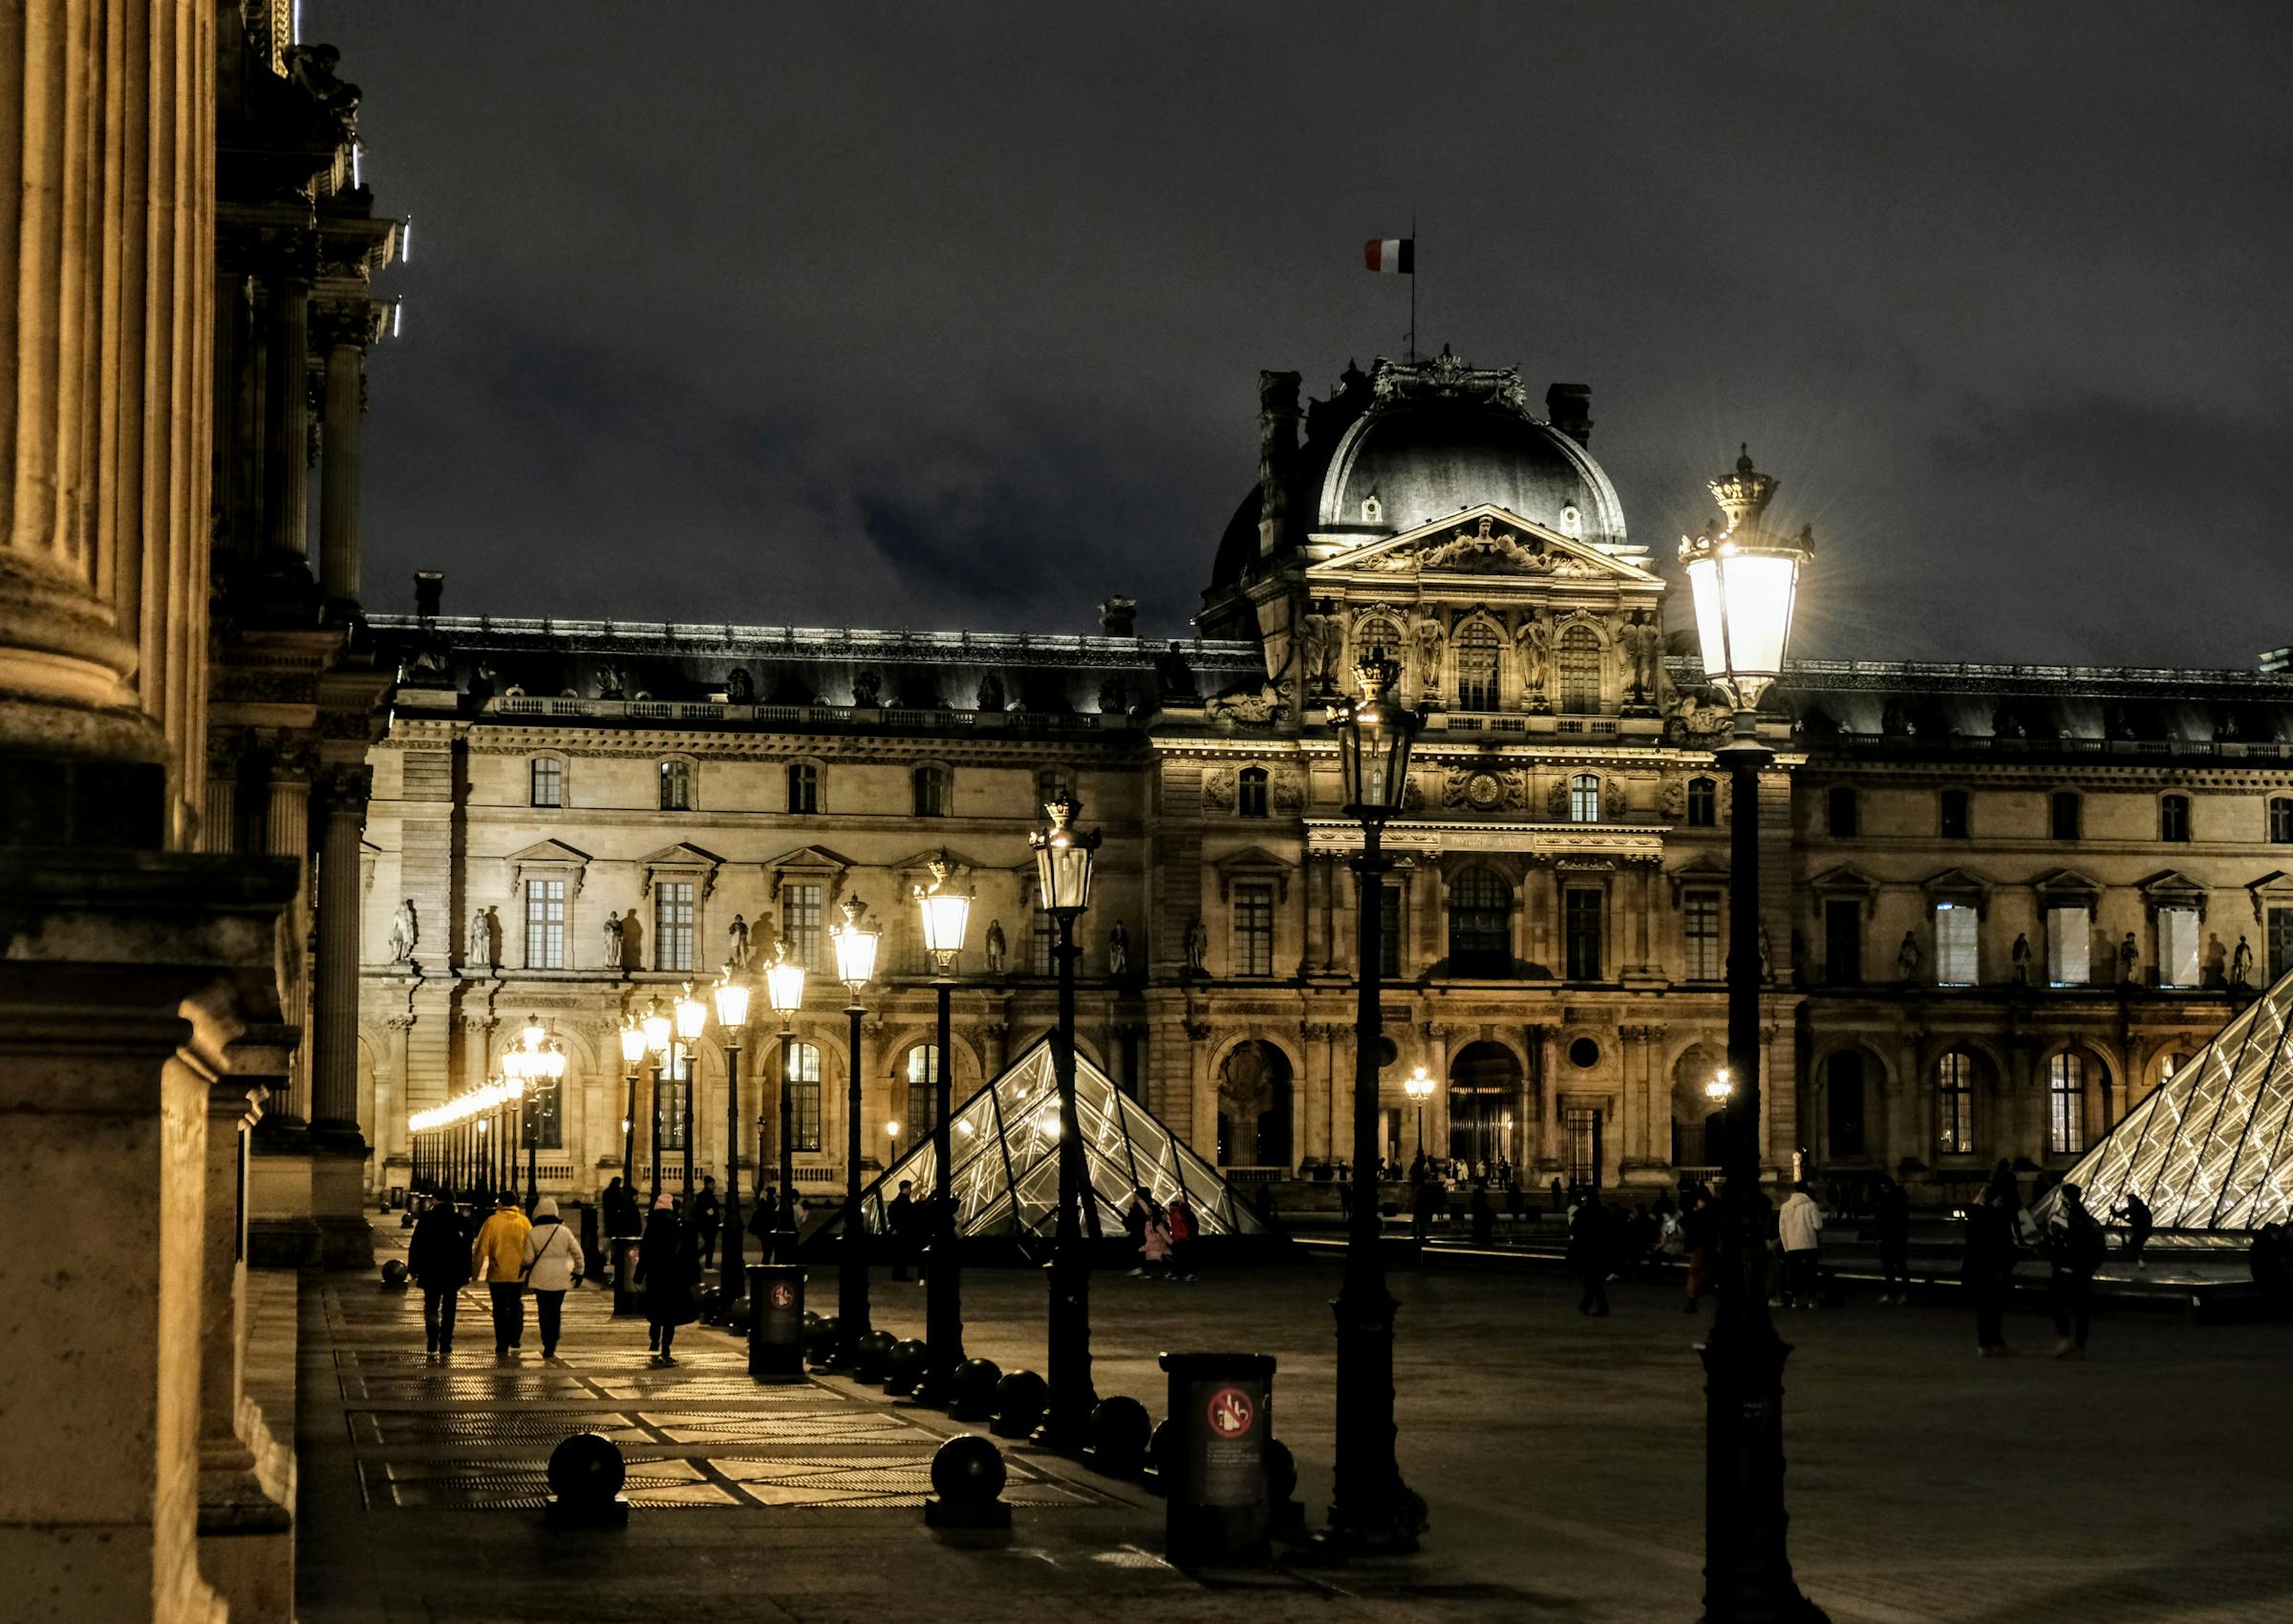 Louvre Museum Paris France at night